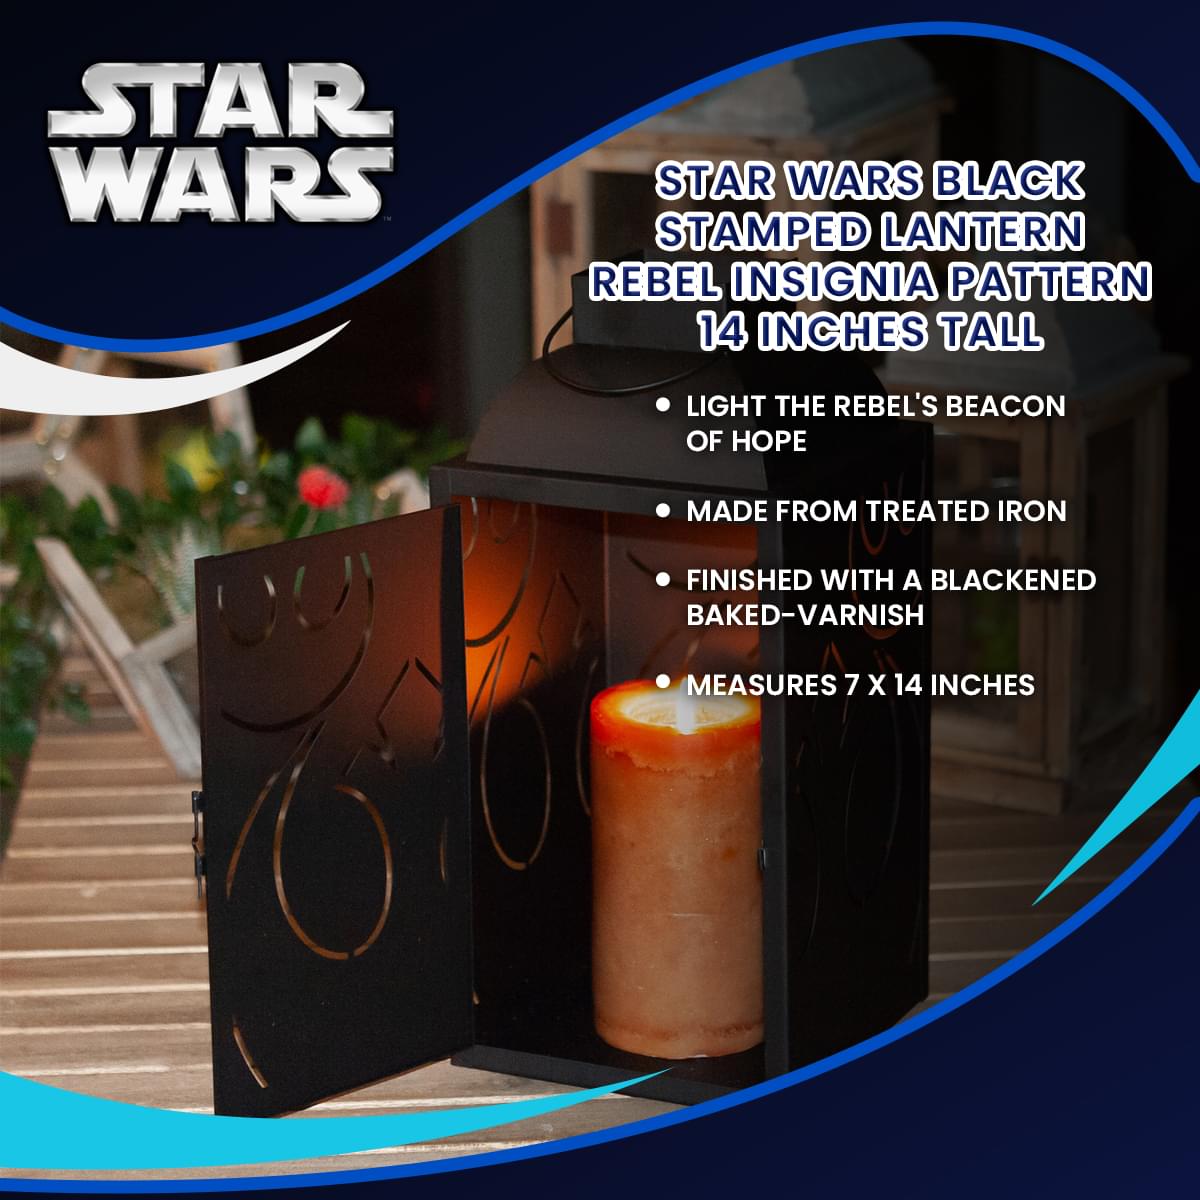 Star Wars Black Stamped Lantern | Rebel Insignia Pattern | 14 Inches Tall